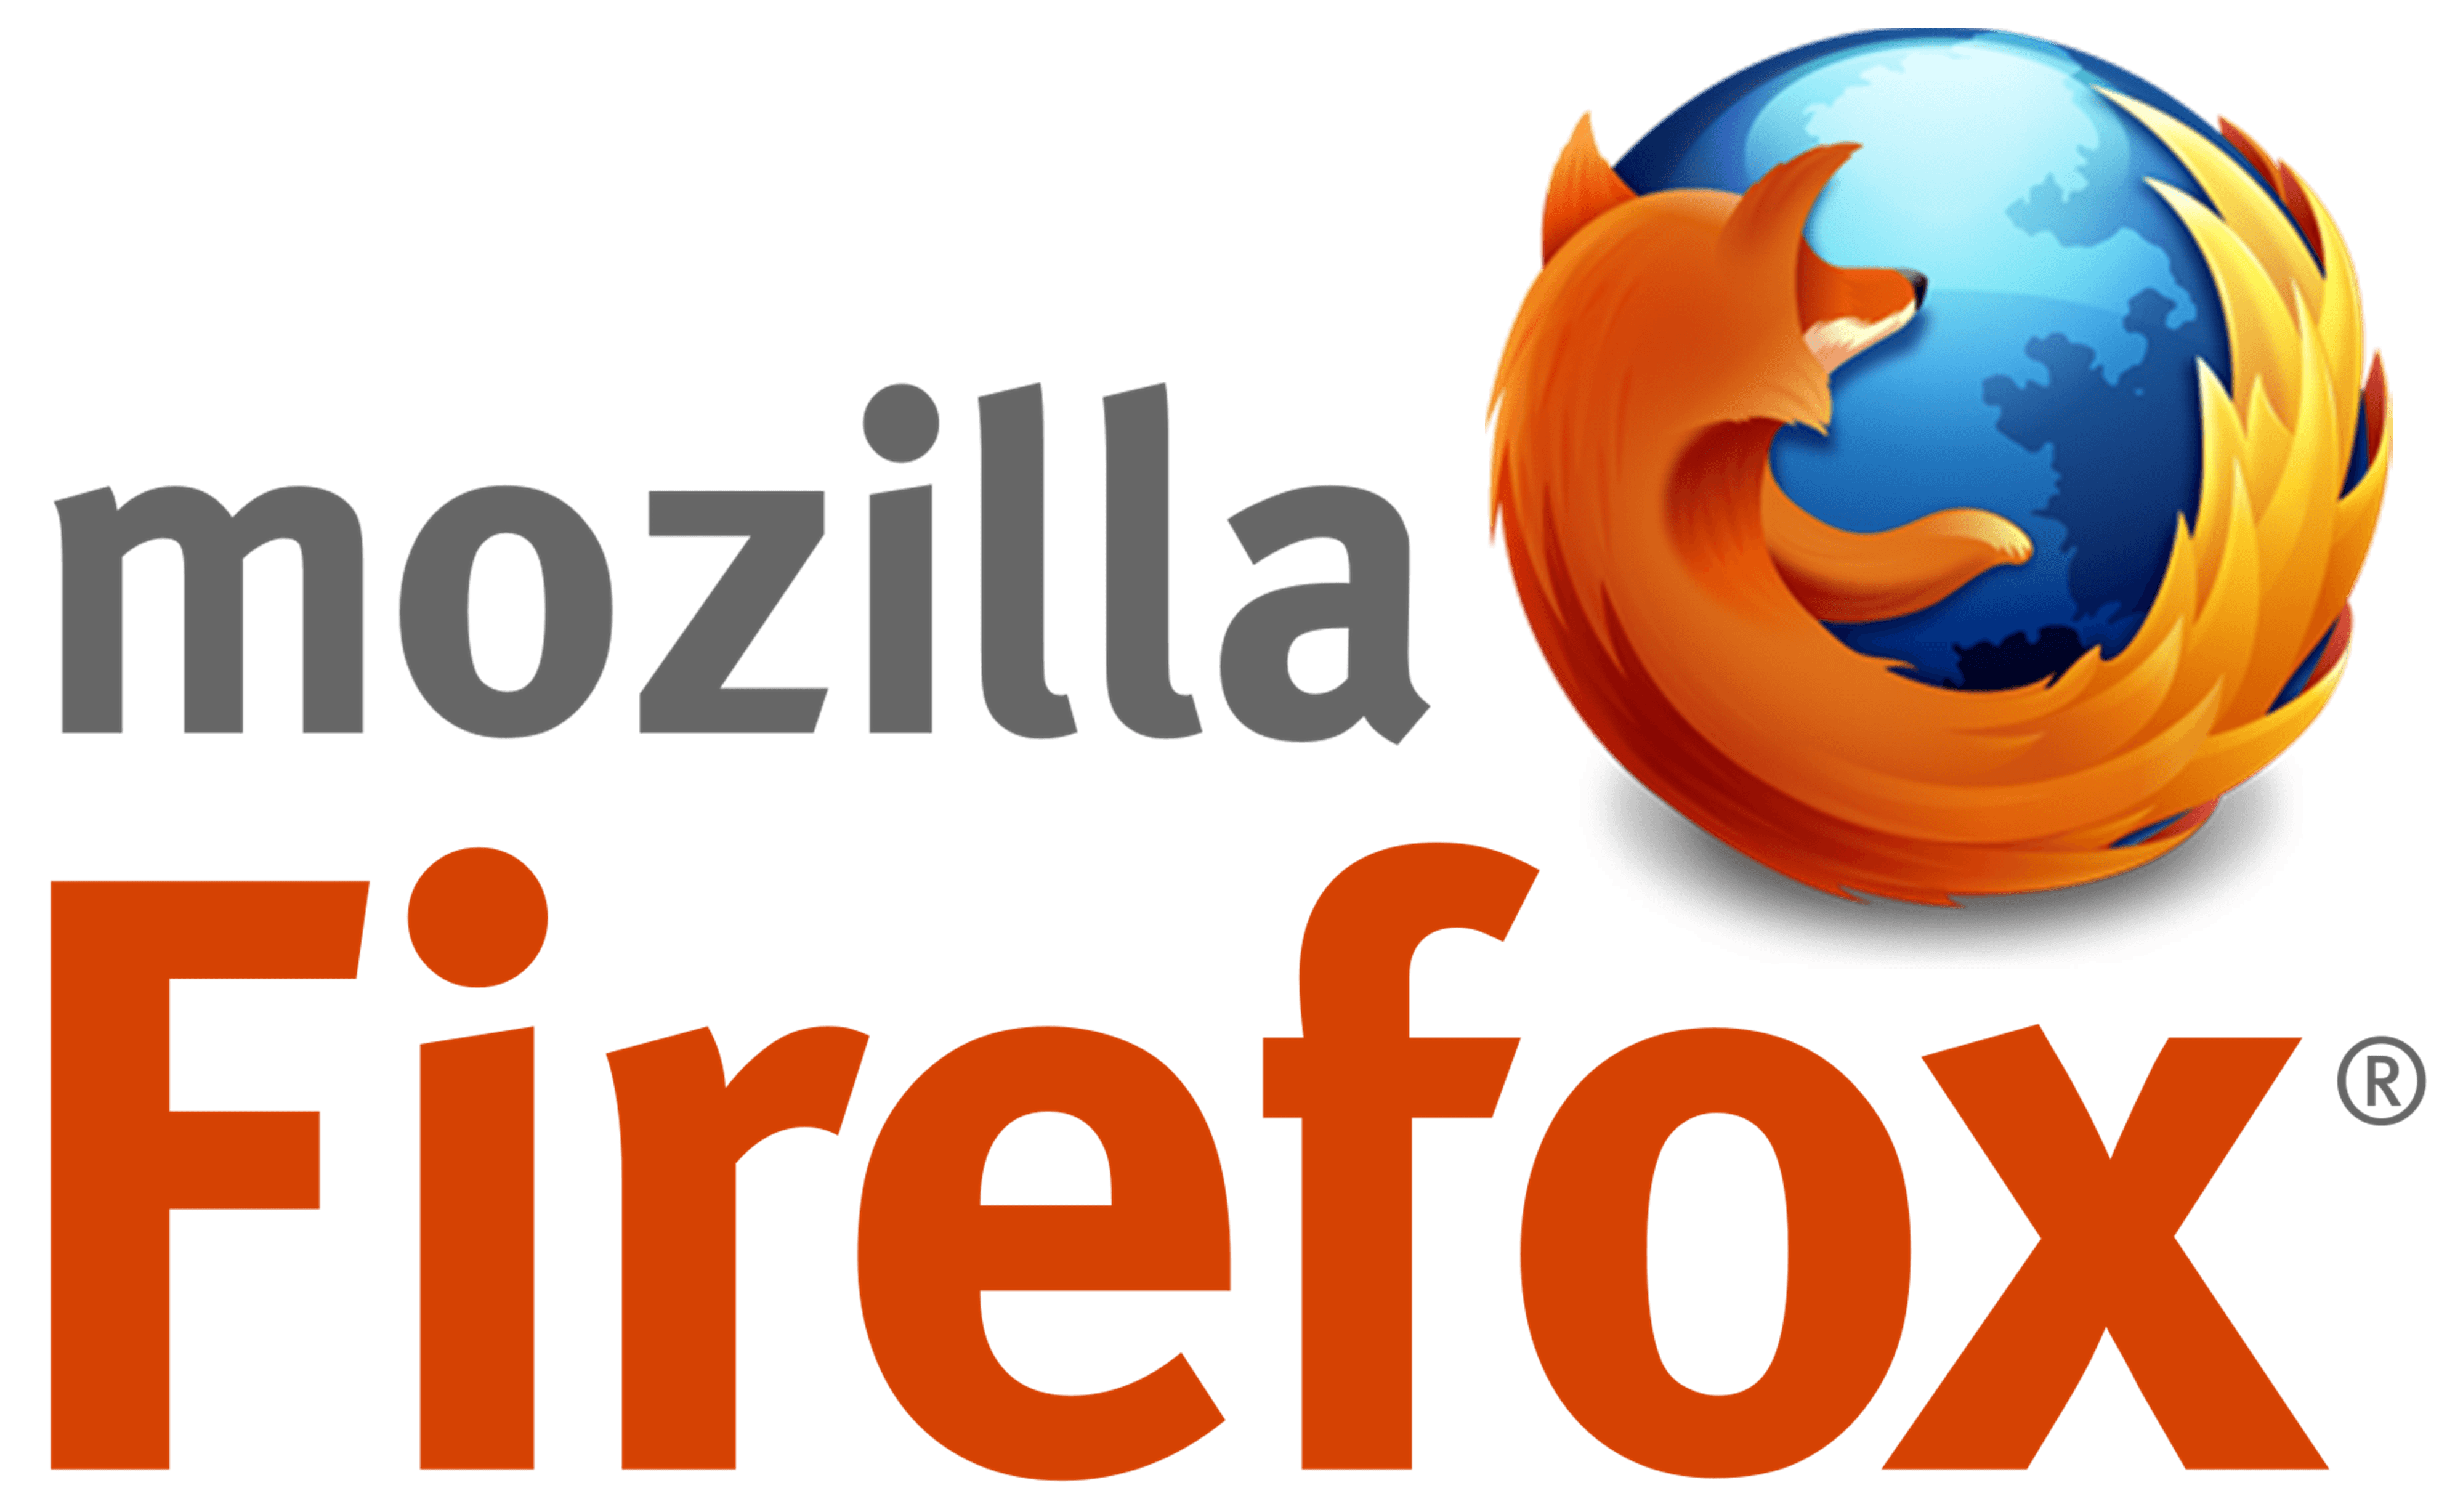 Mozzila Firefox Logo - File:Firefox Logo.png - Wikimedia Commons